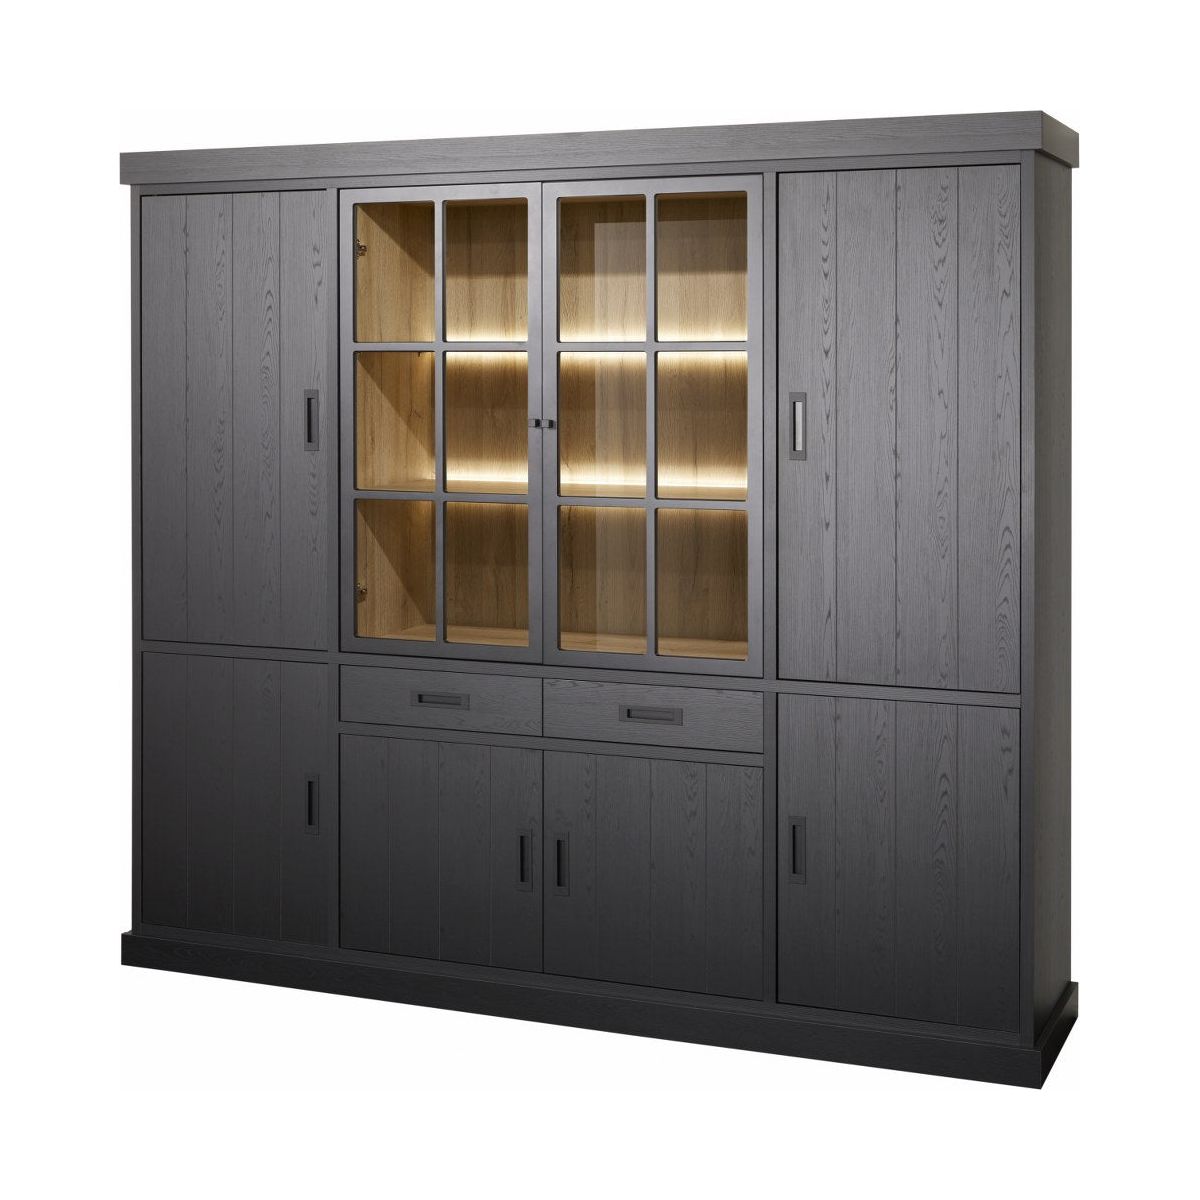 Virine Cabinet / Wall Cabinet | Furniture series Sigma | black, natural |